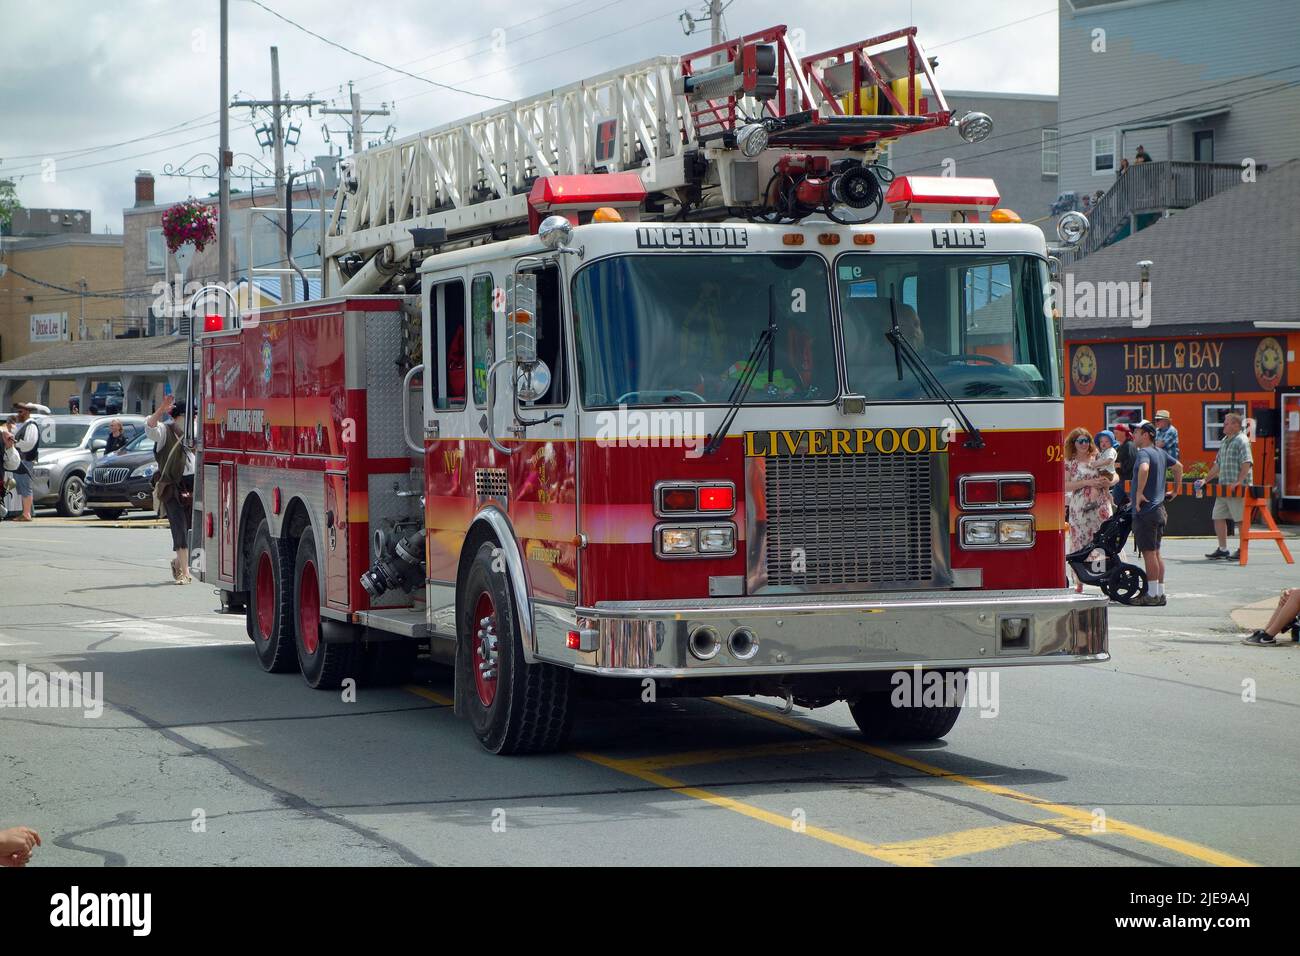 Fire ladder truck, Liverpool, Nova Scotia, Canada Stock Photo